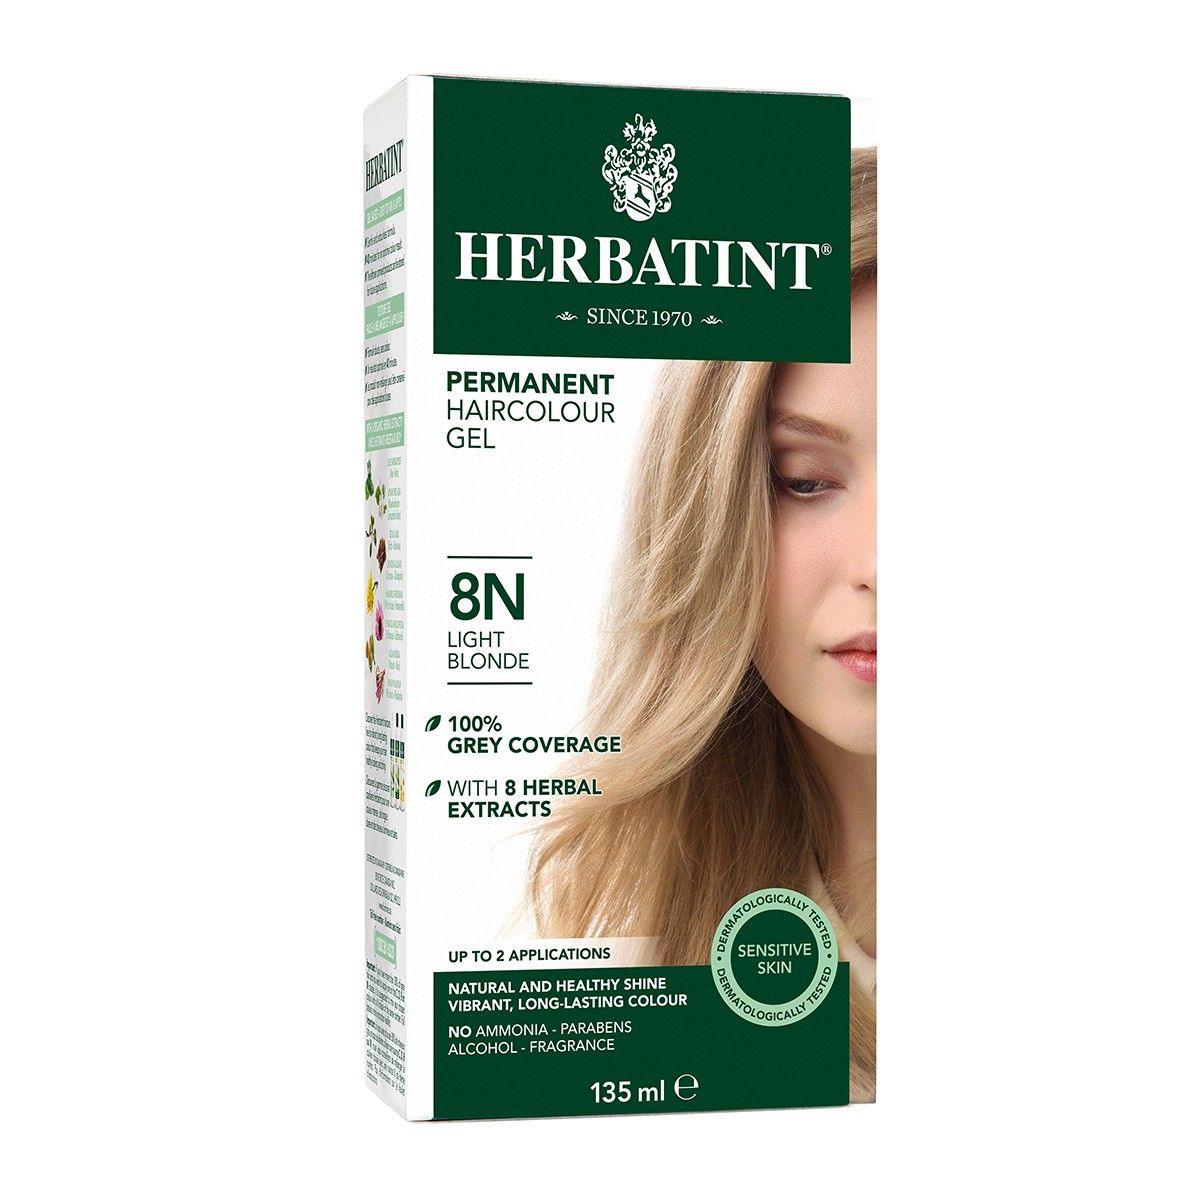 Herbatint Permanent Herbal HairColour Gel 8N Light Blonde Hair Colour at Village Vitamin Store